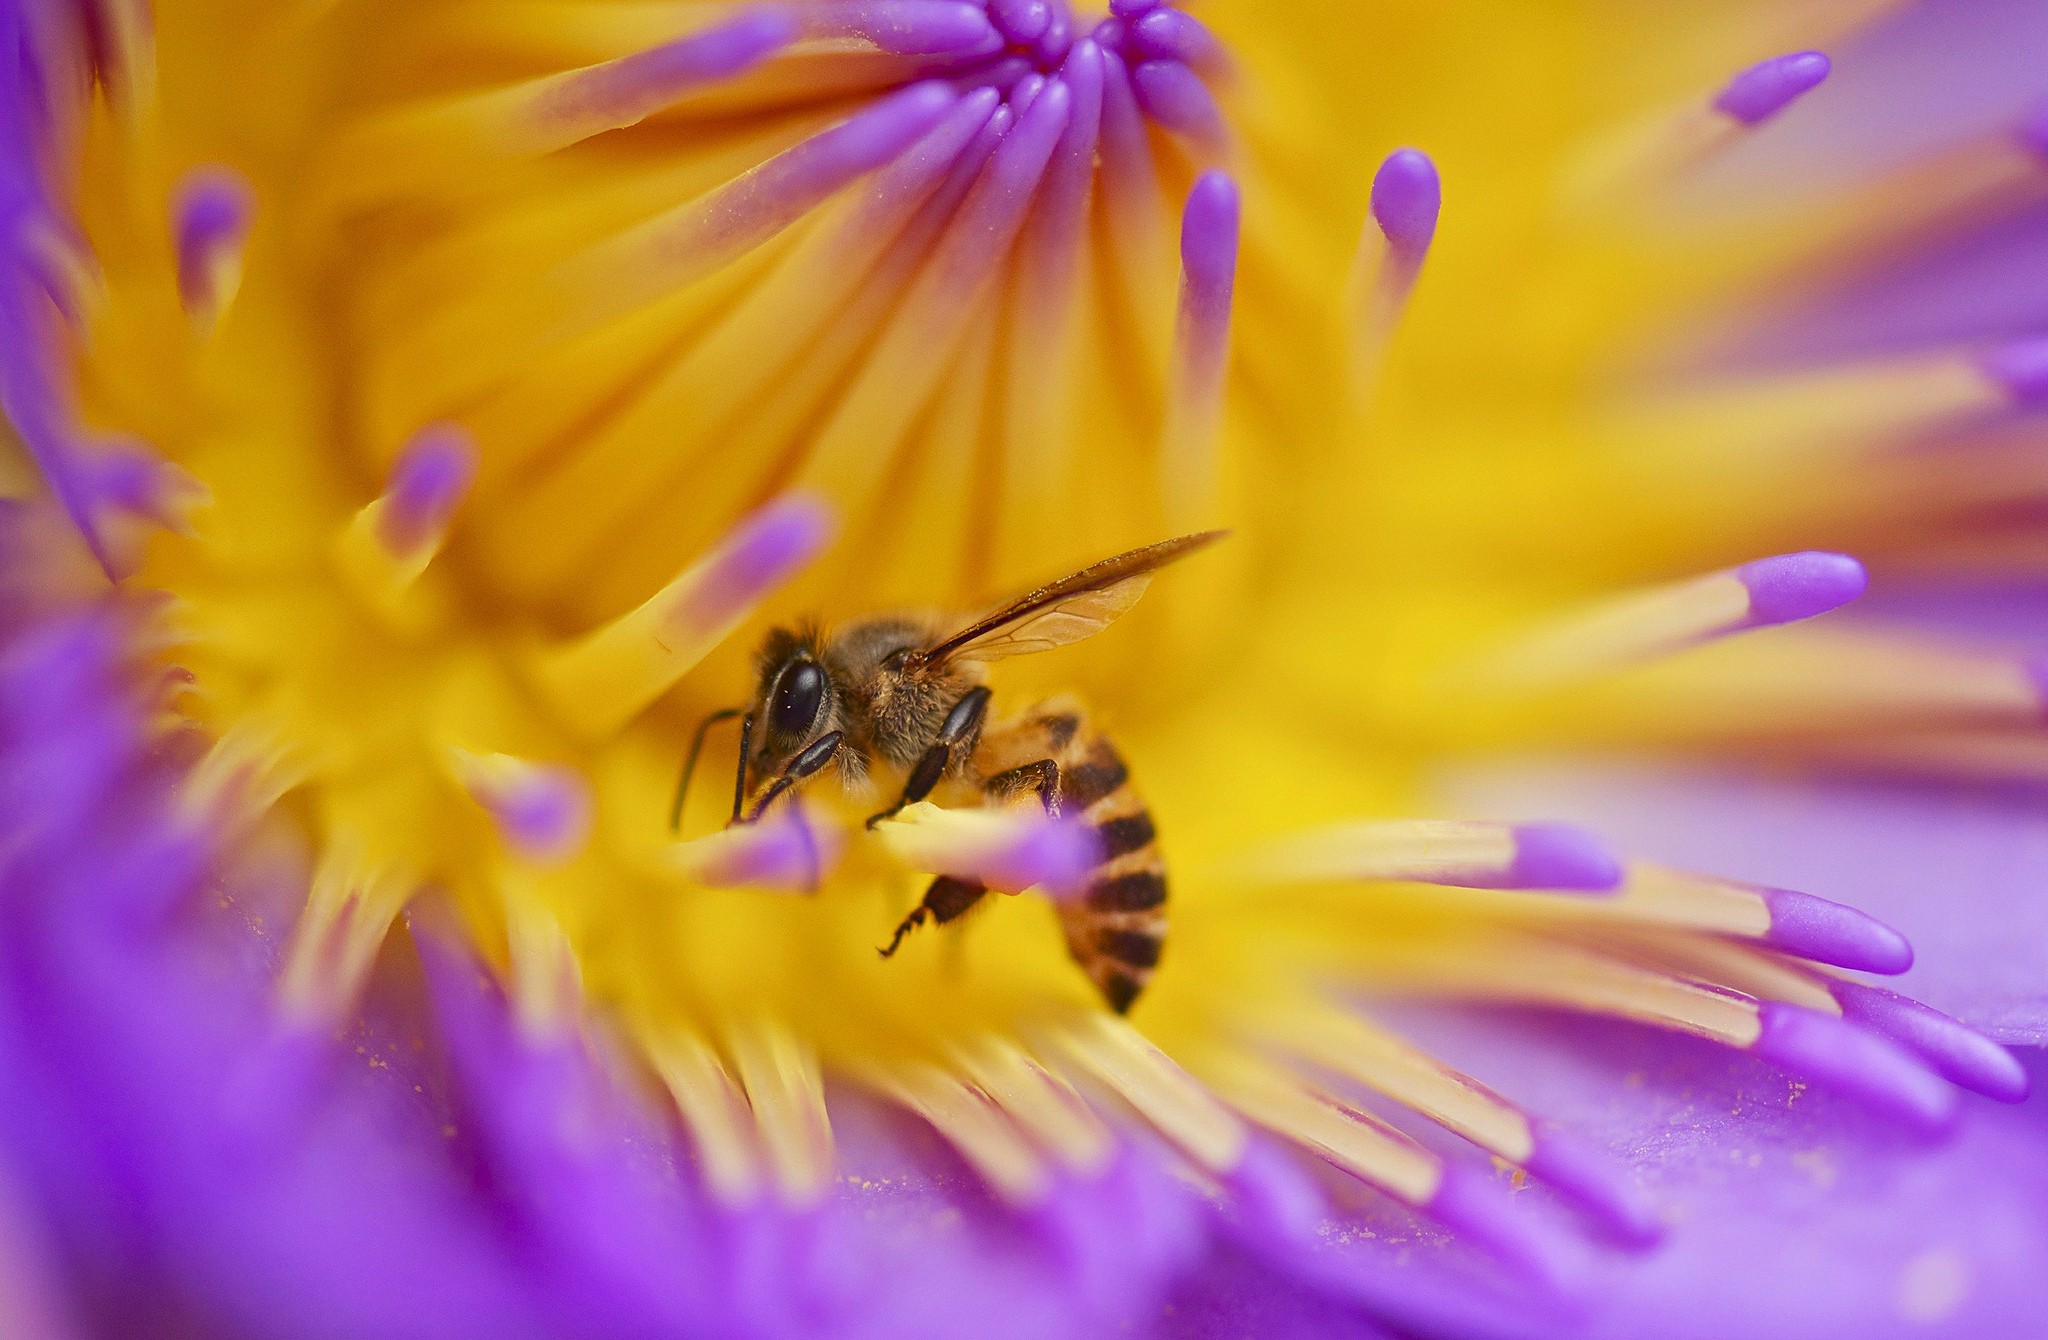 A honeybee on a yellow flower.